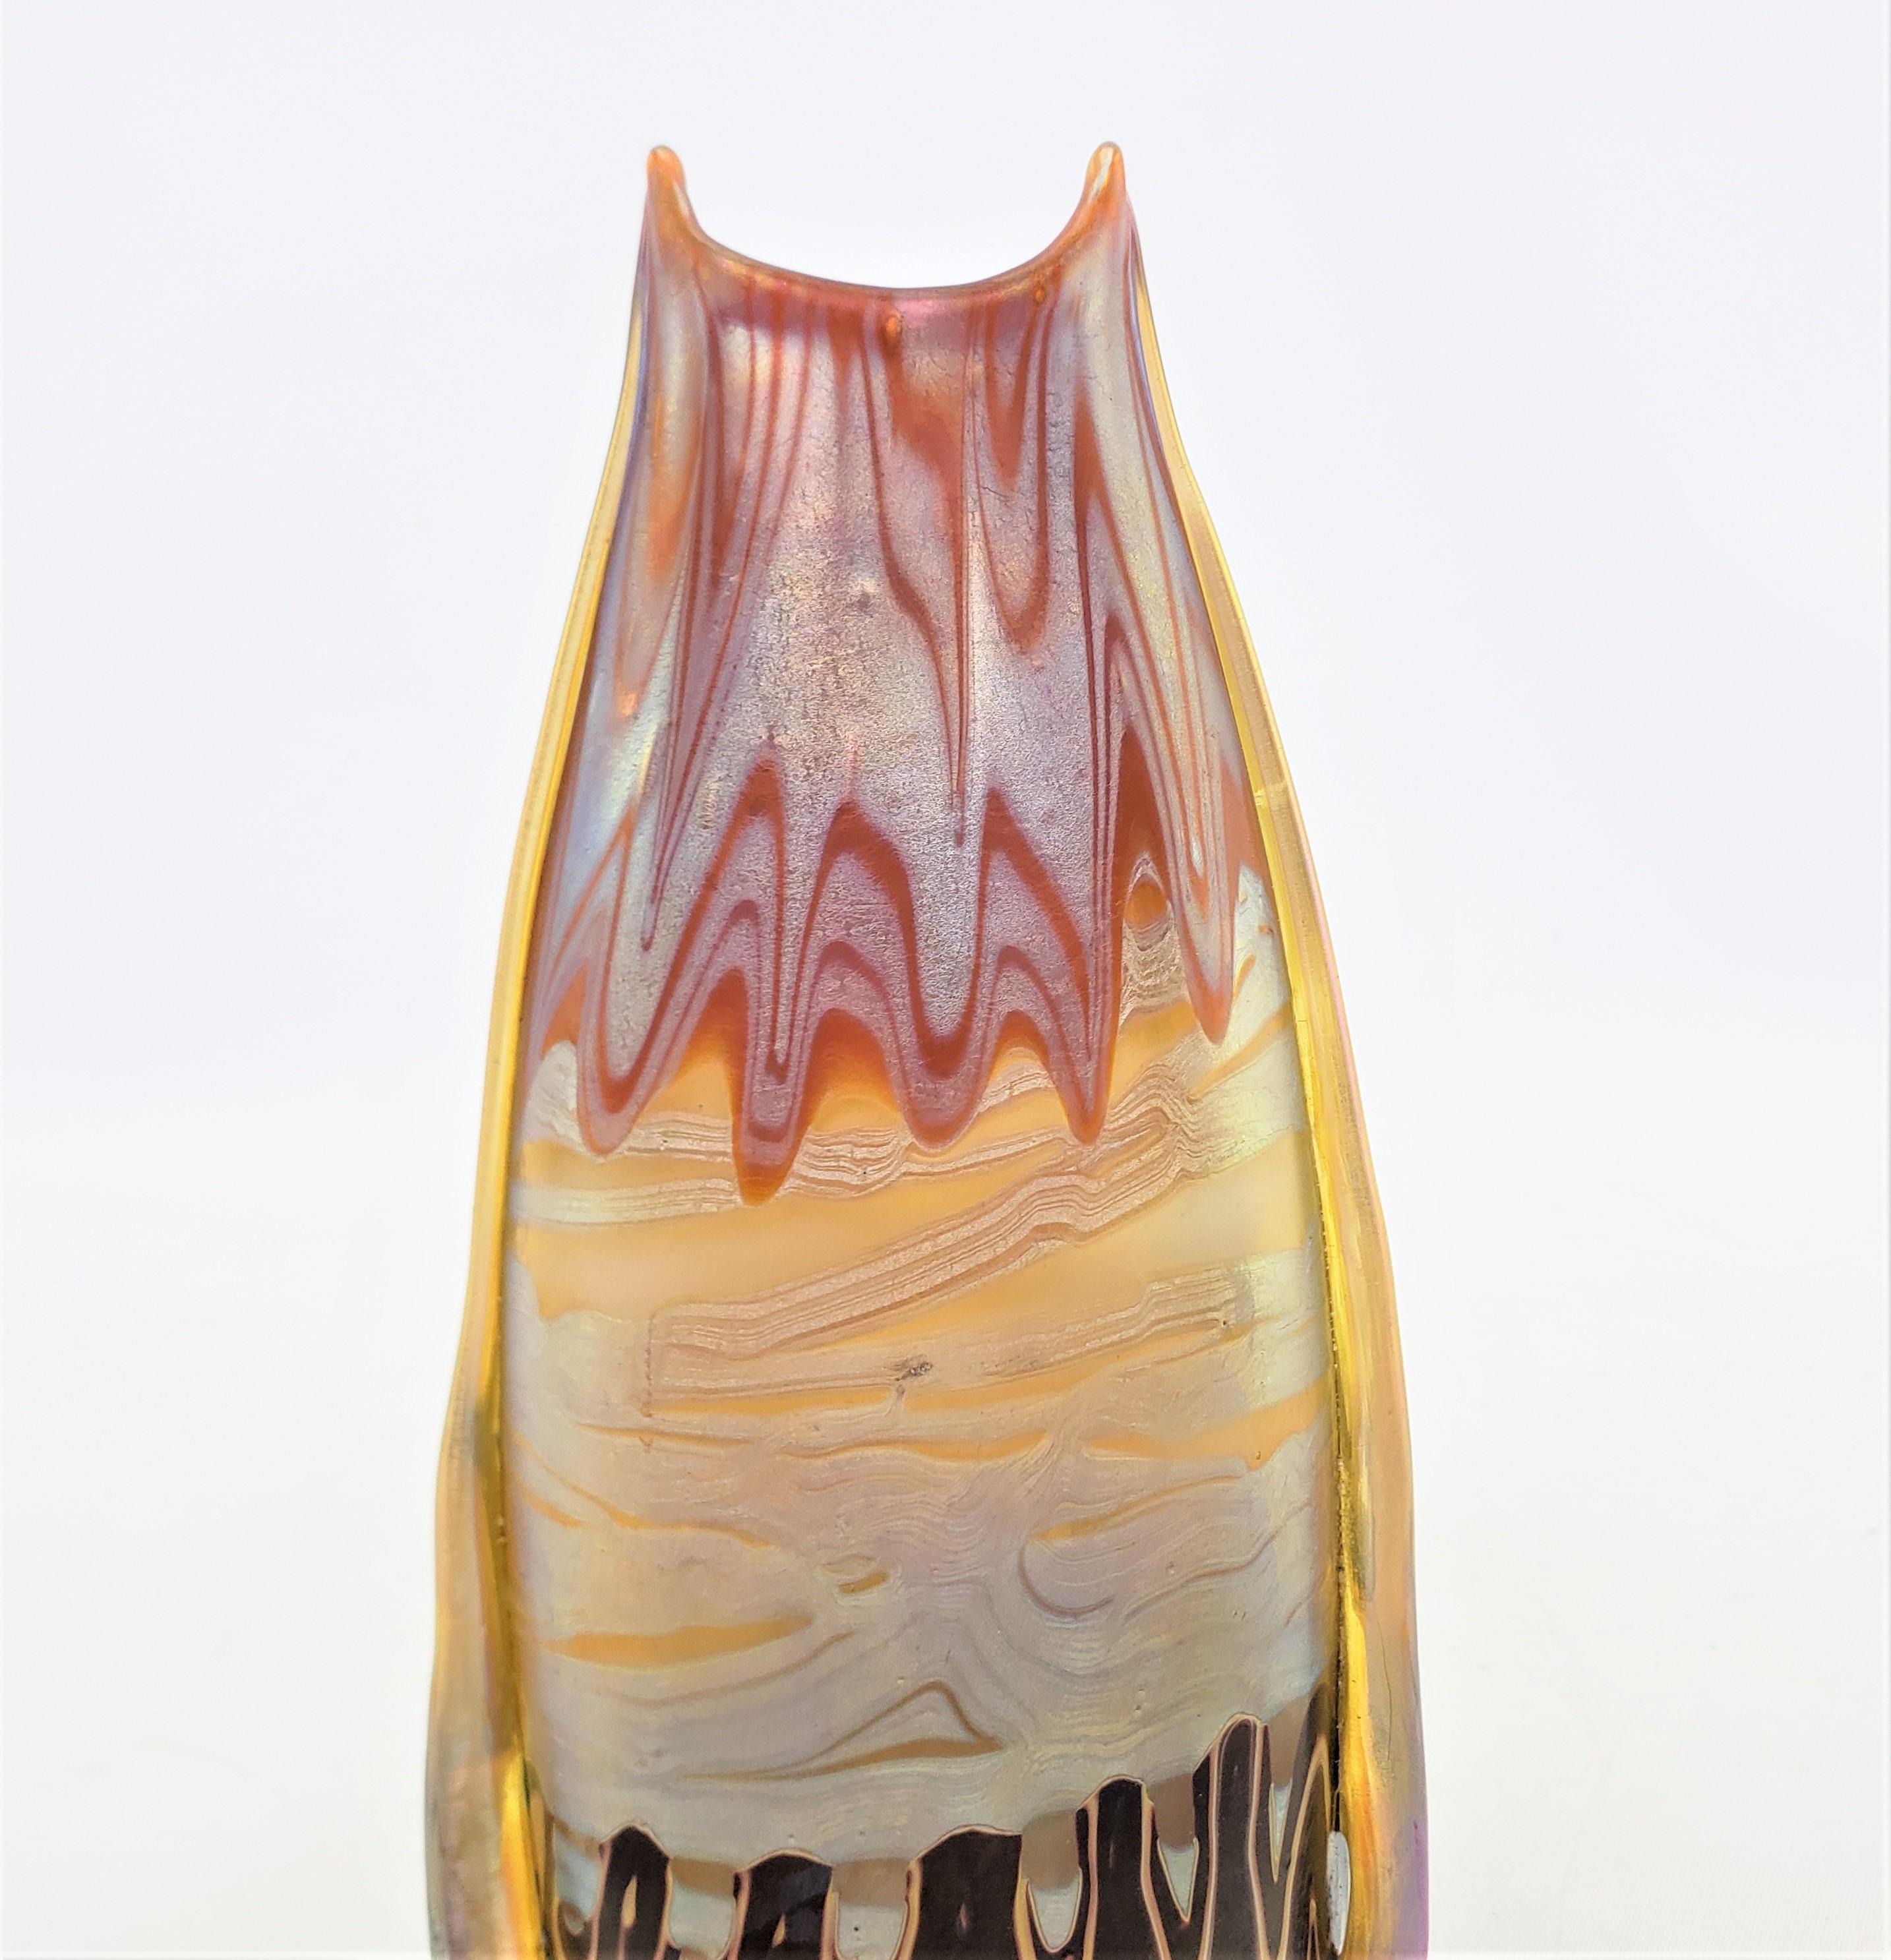 Hofstoetter Designed Signed Loetz Large Antique Art Glass Irridescent Vase 6